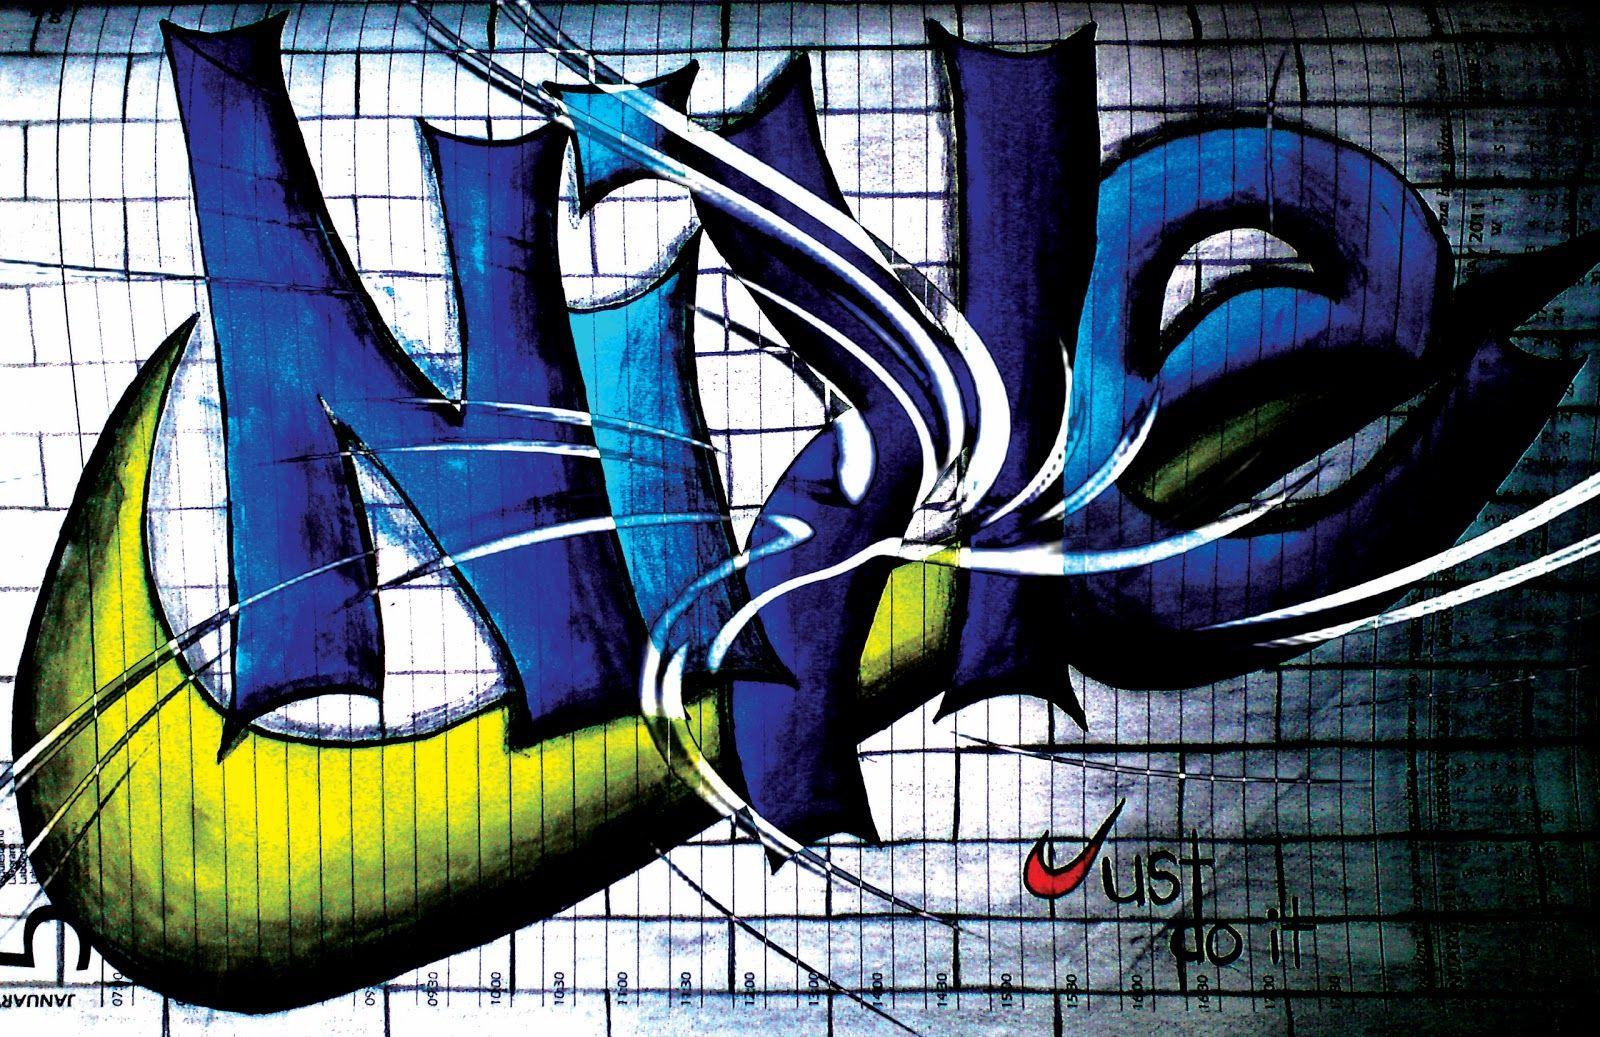 Graffiti Nike Logo - LogoDix